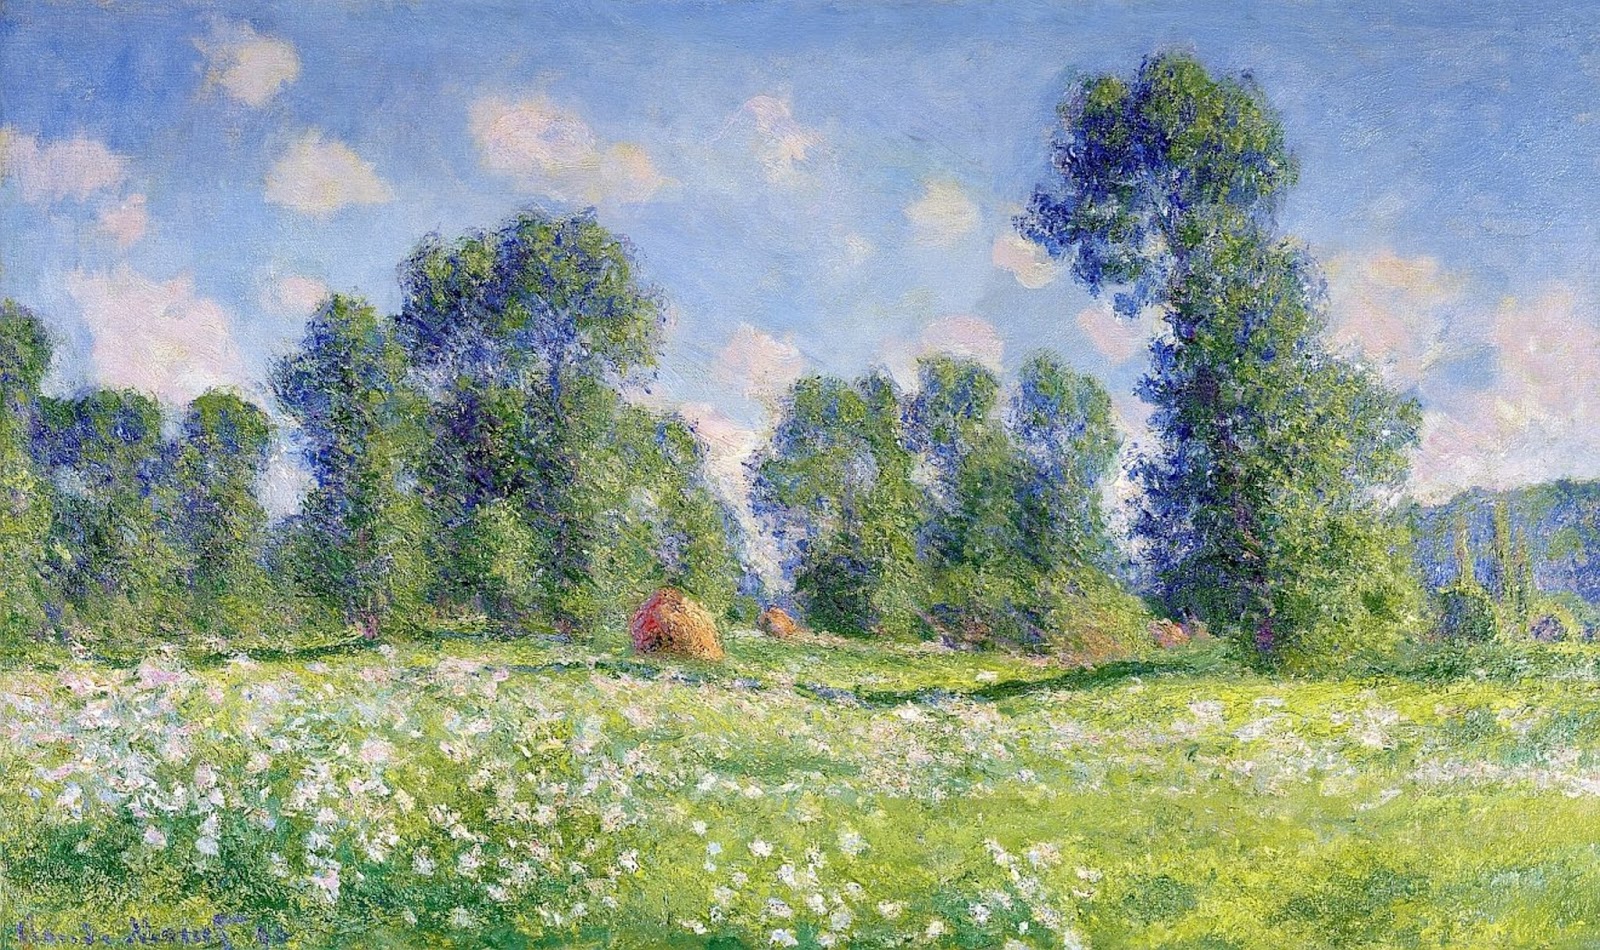 Claude+Monet-1840-1926 (250).jpg